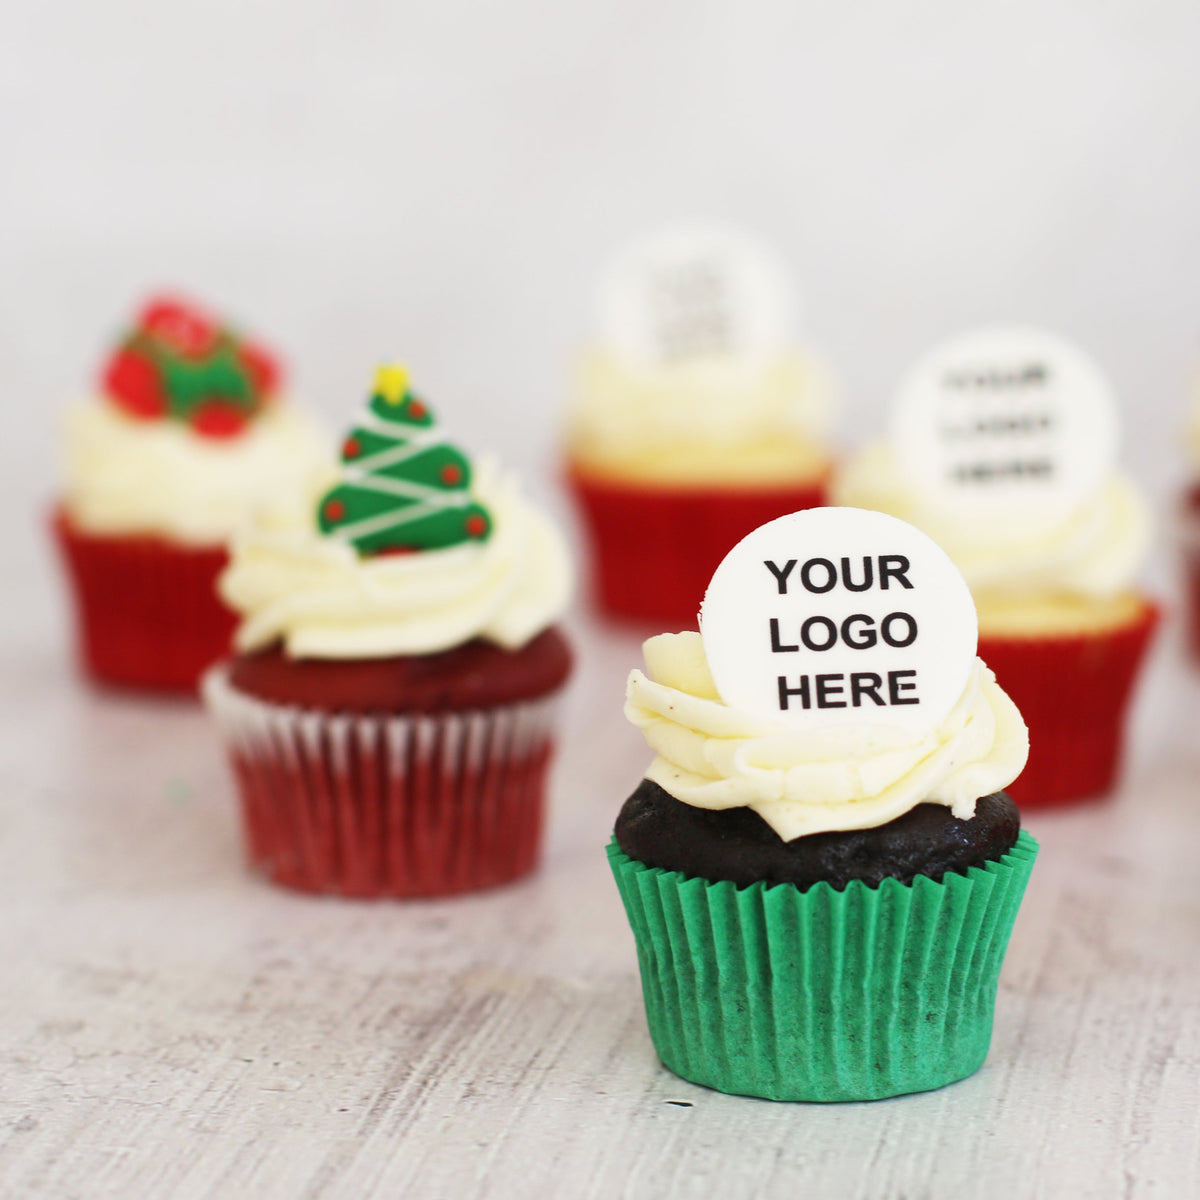 Christmas Corporate Mini Cupcakes Cupcakes The Cupcake Queens 